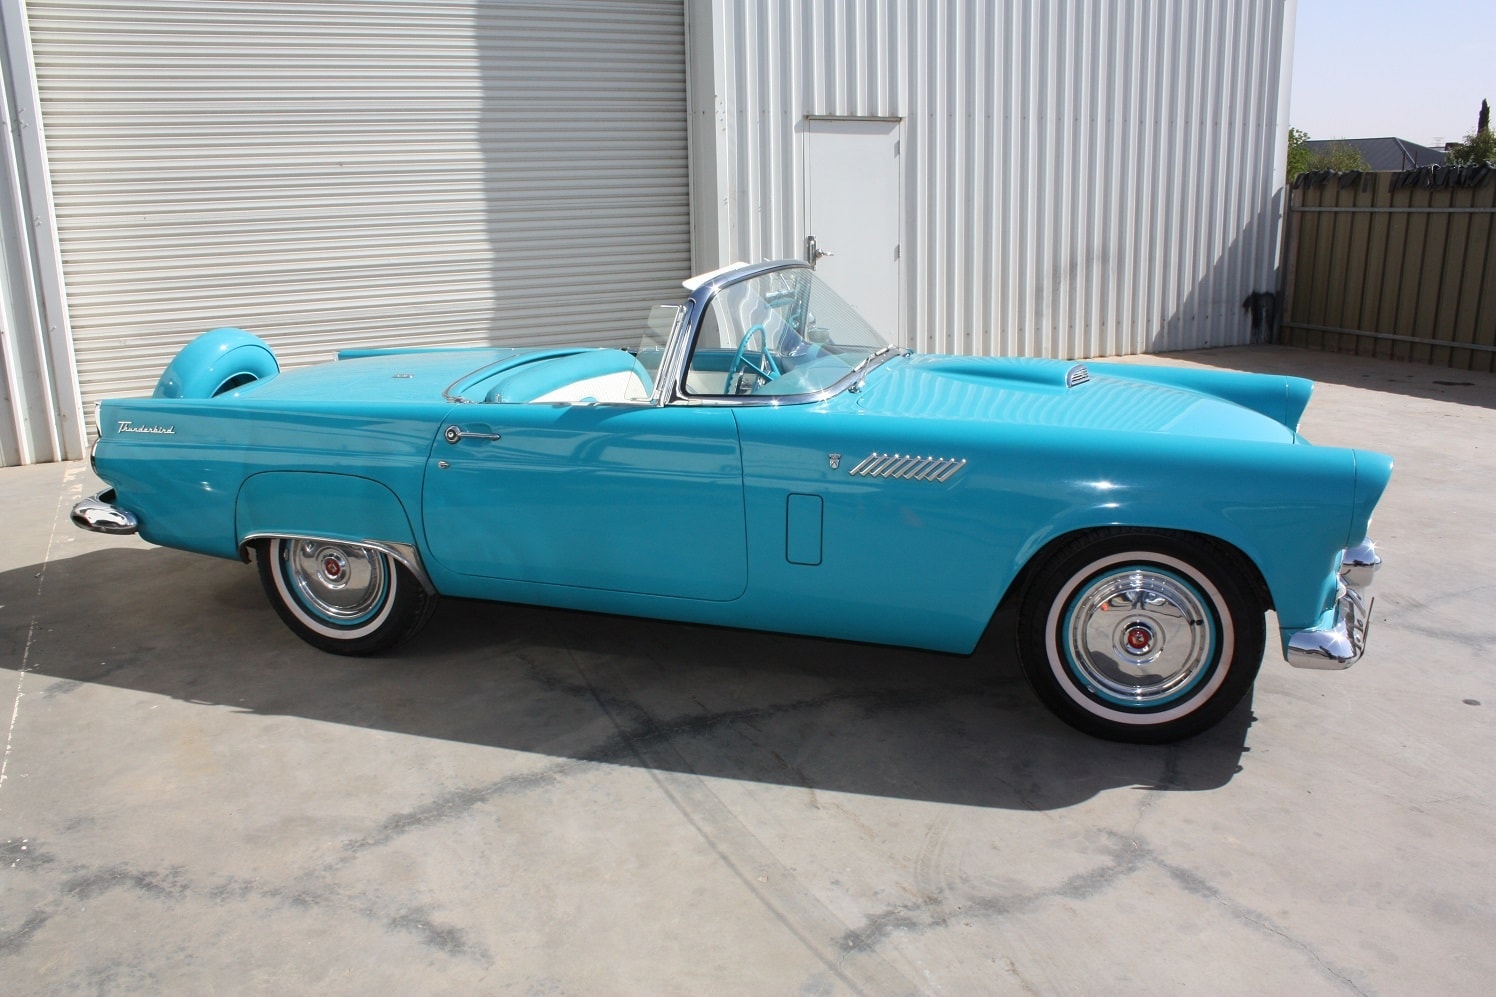 1956 Ford Thunderbird blue